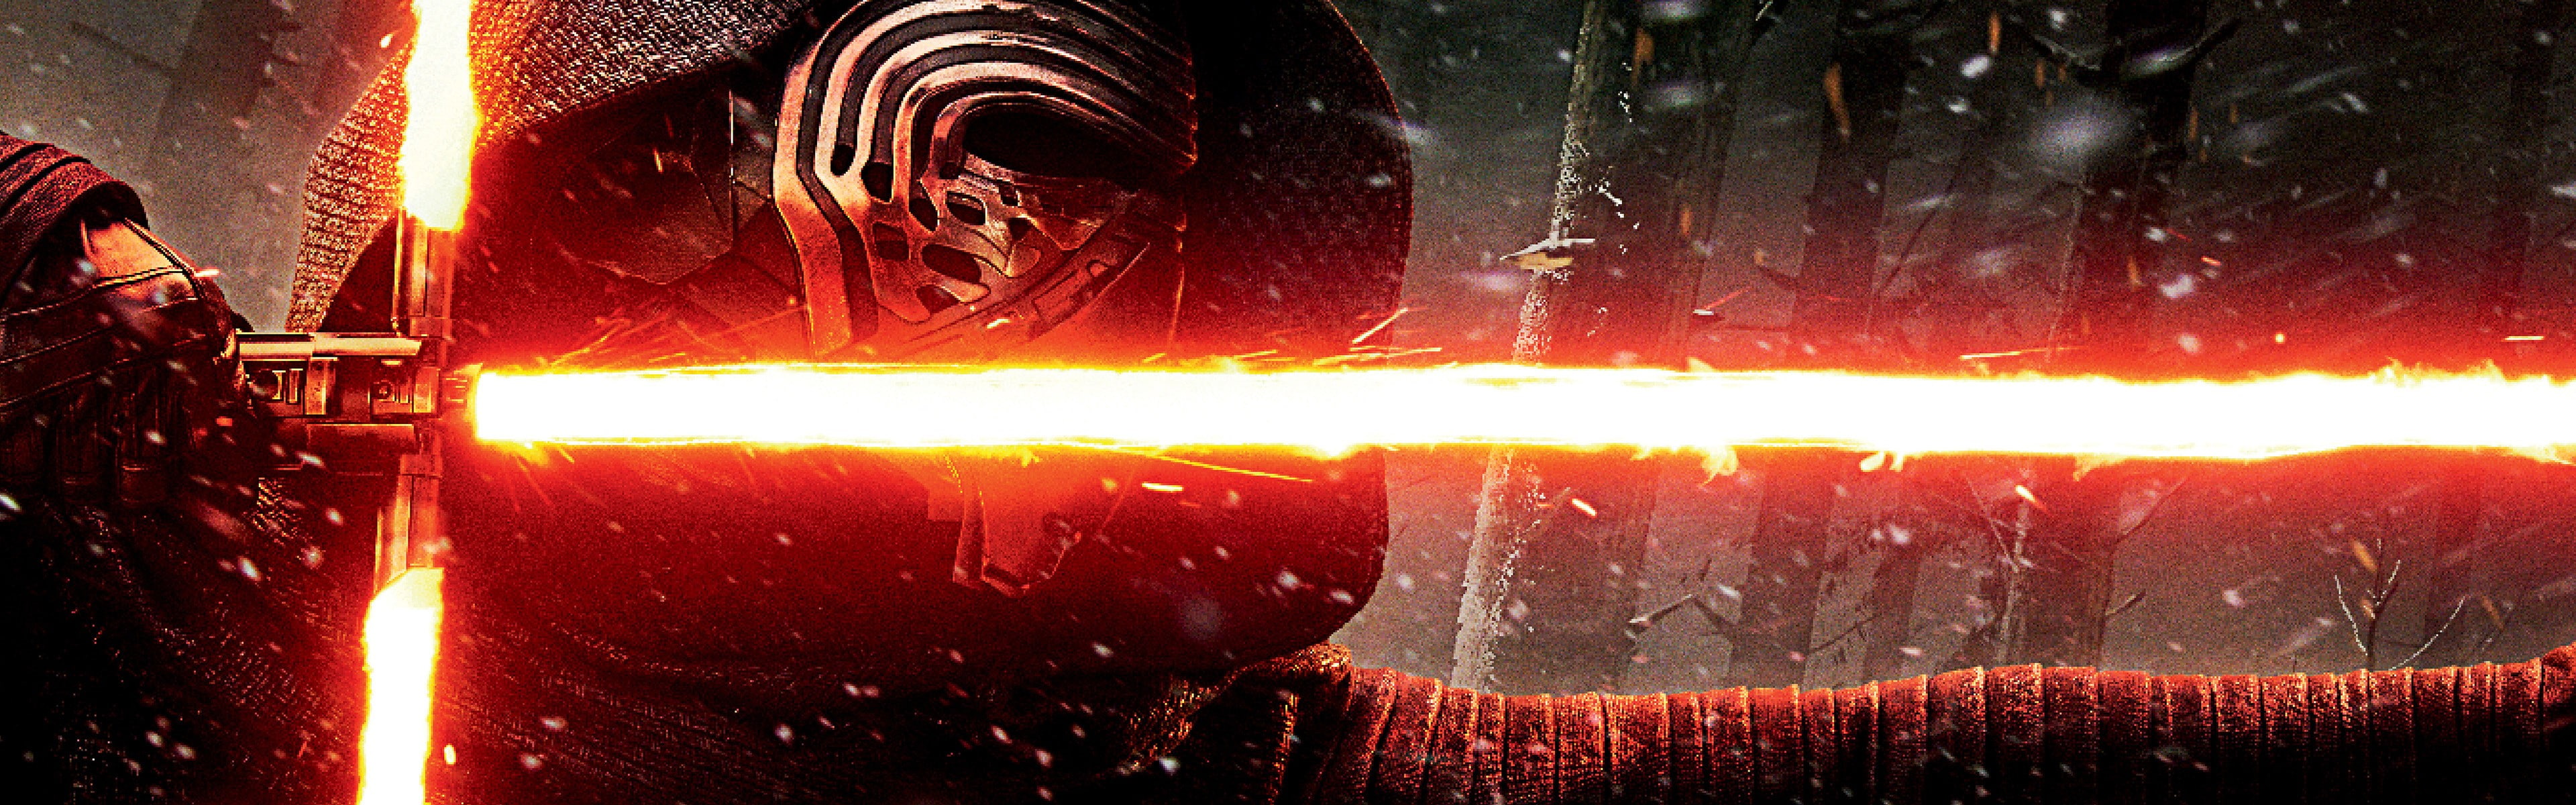 Kylo Ren, Star Wars: The Force Awakens, movies, lightsaber